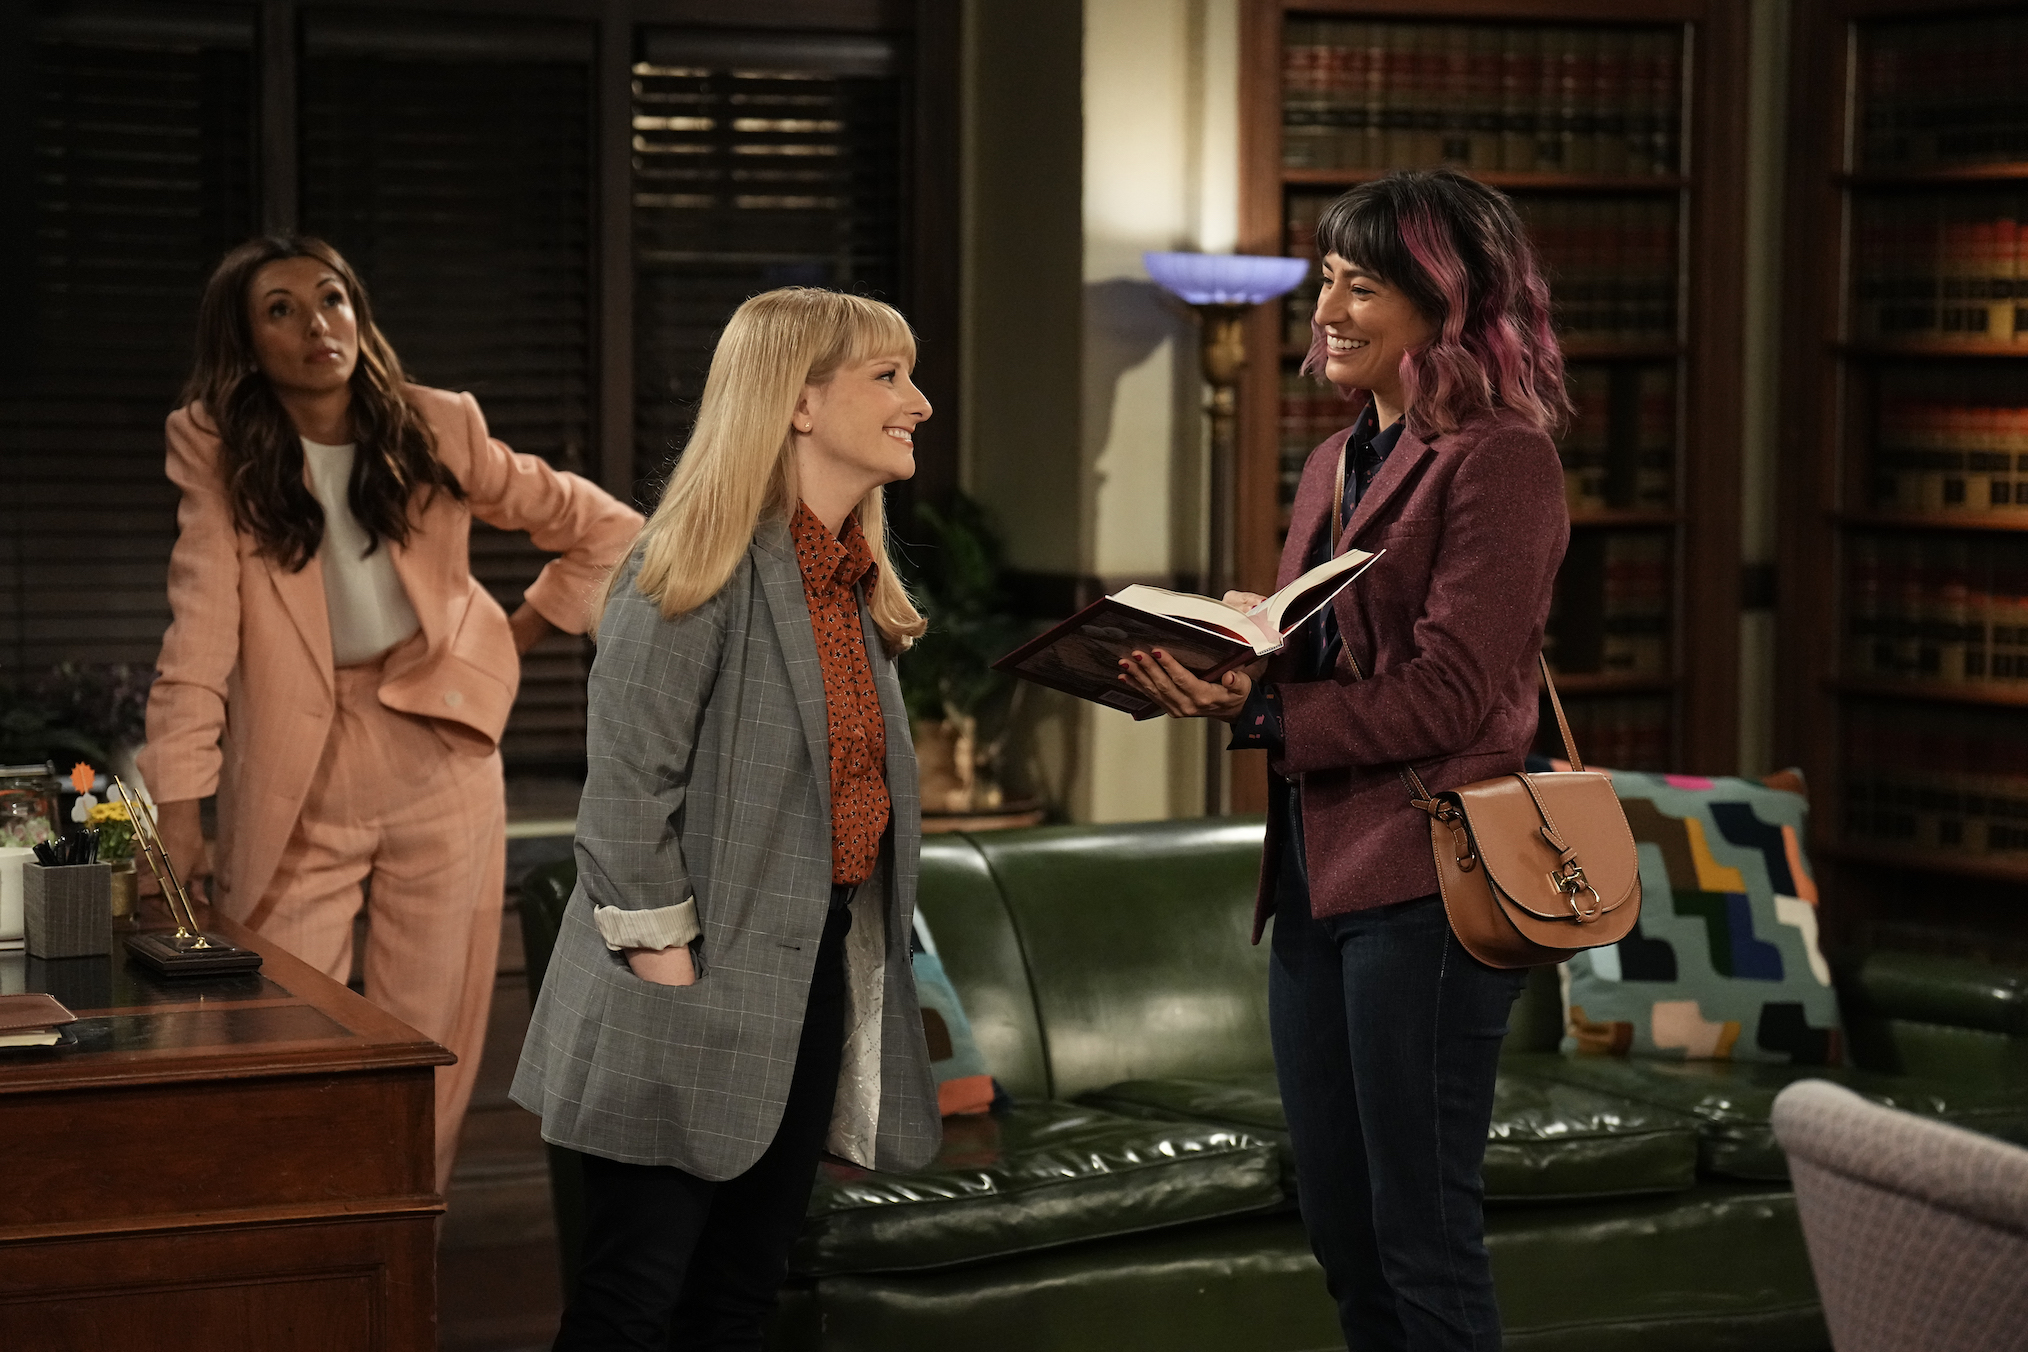 India de Beaufort, Melissa Rauch, and Melissa Villaseñor in 'Night Court' Season 1 Episode 12